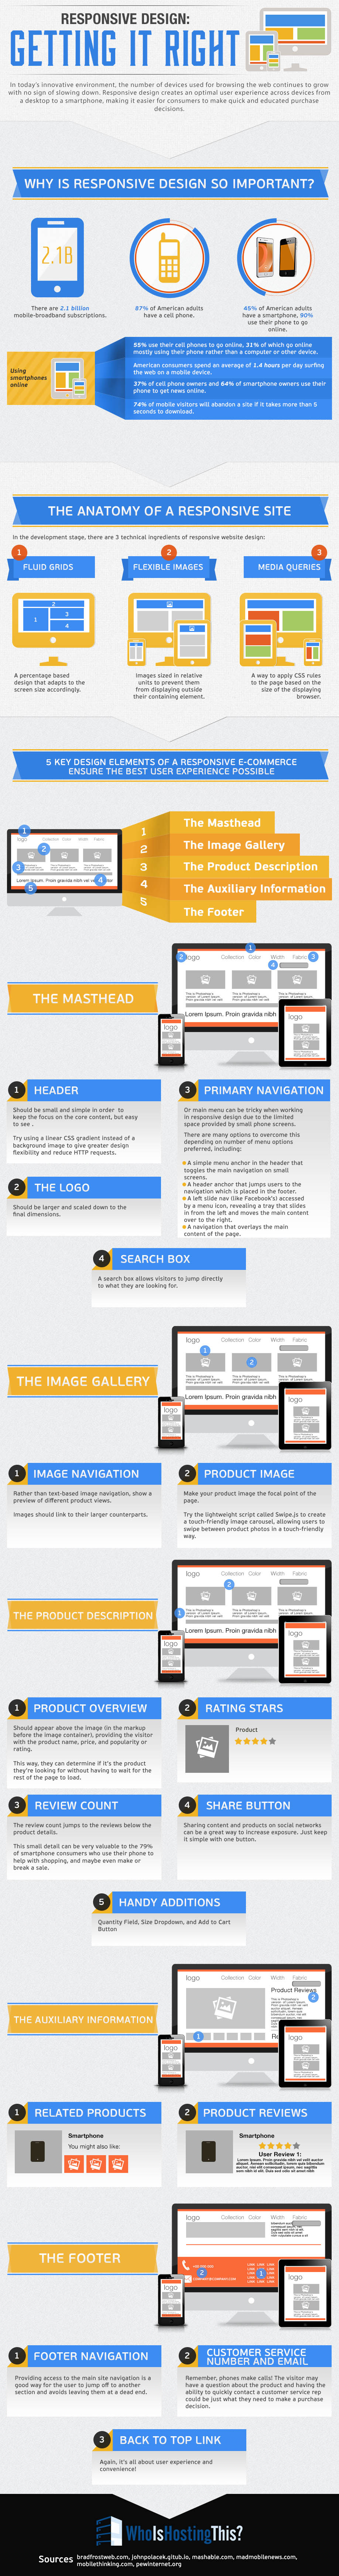 infographic-responsive-design-6001